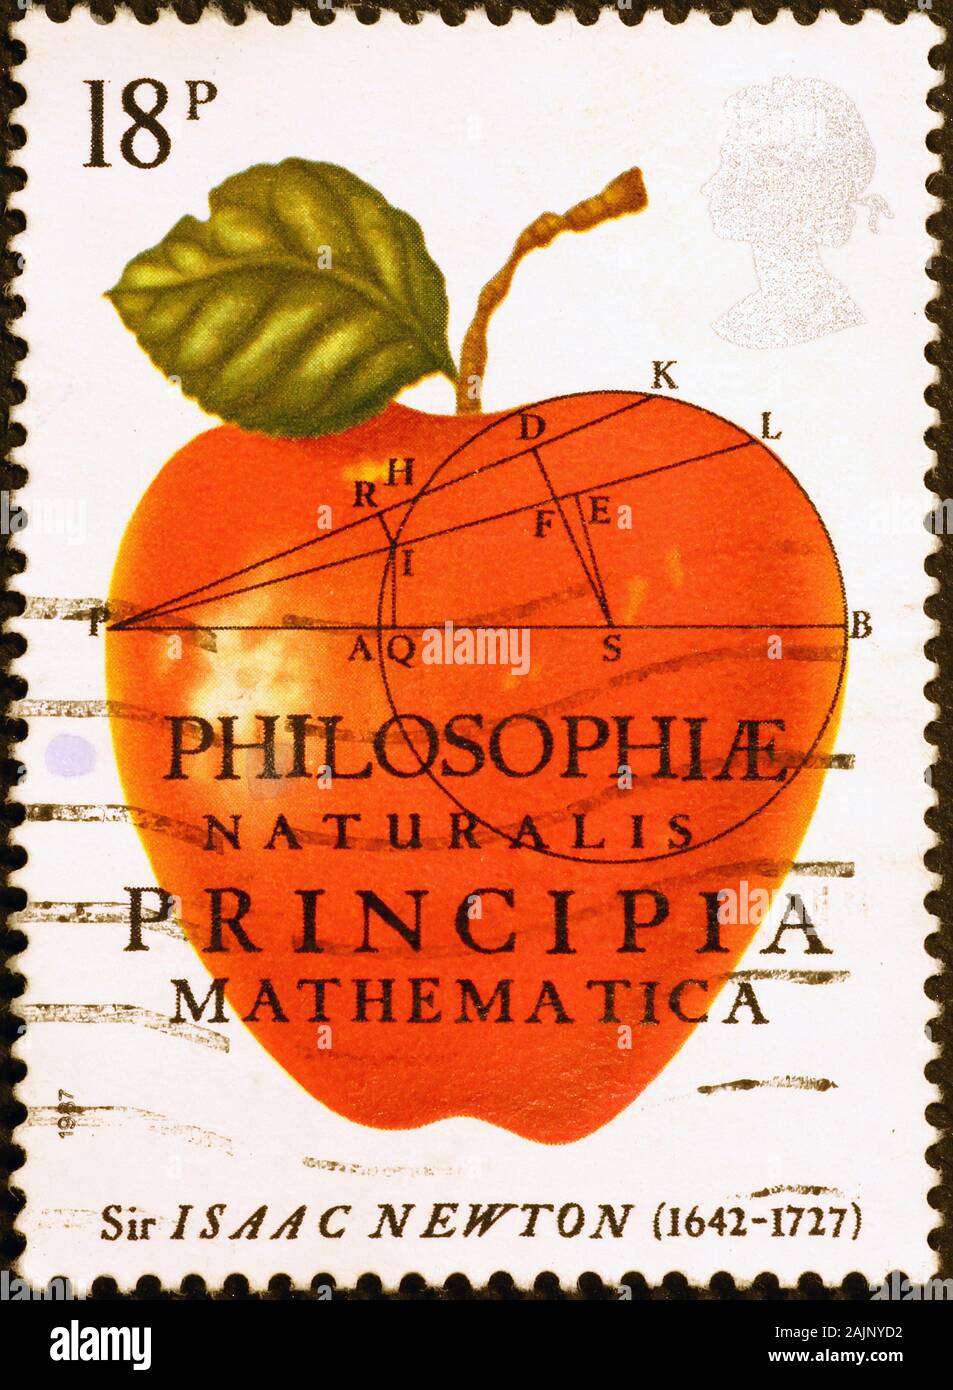 Celebration of Isaac Newton on british postage stamp Stock Photo